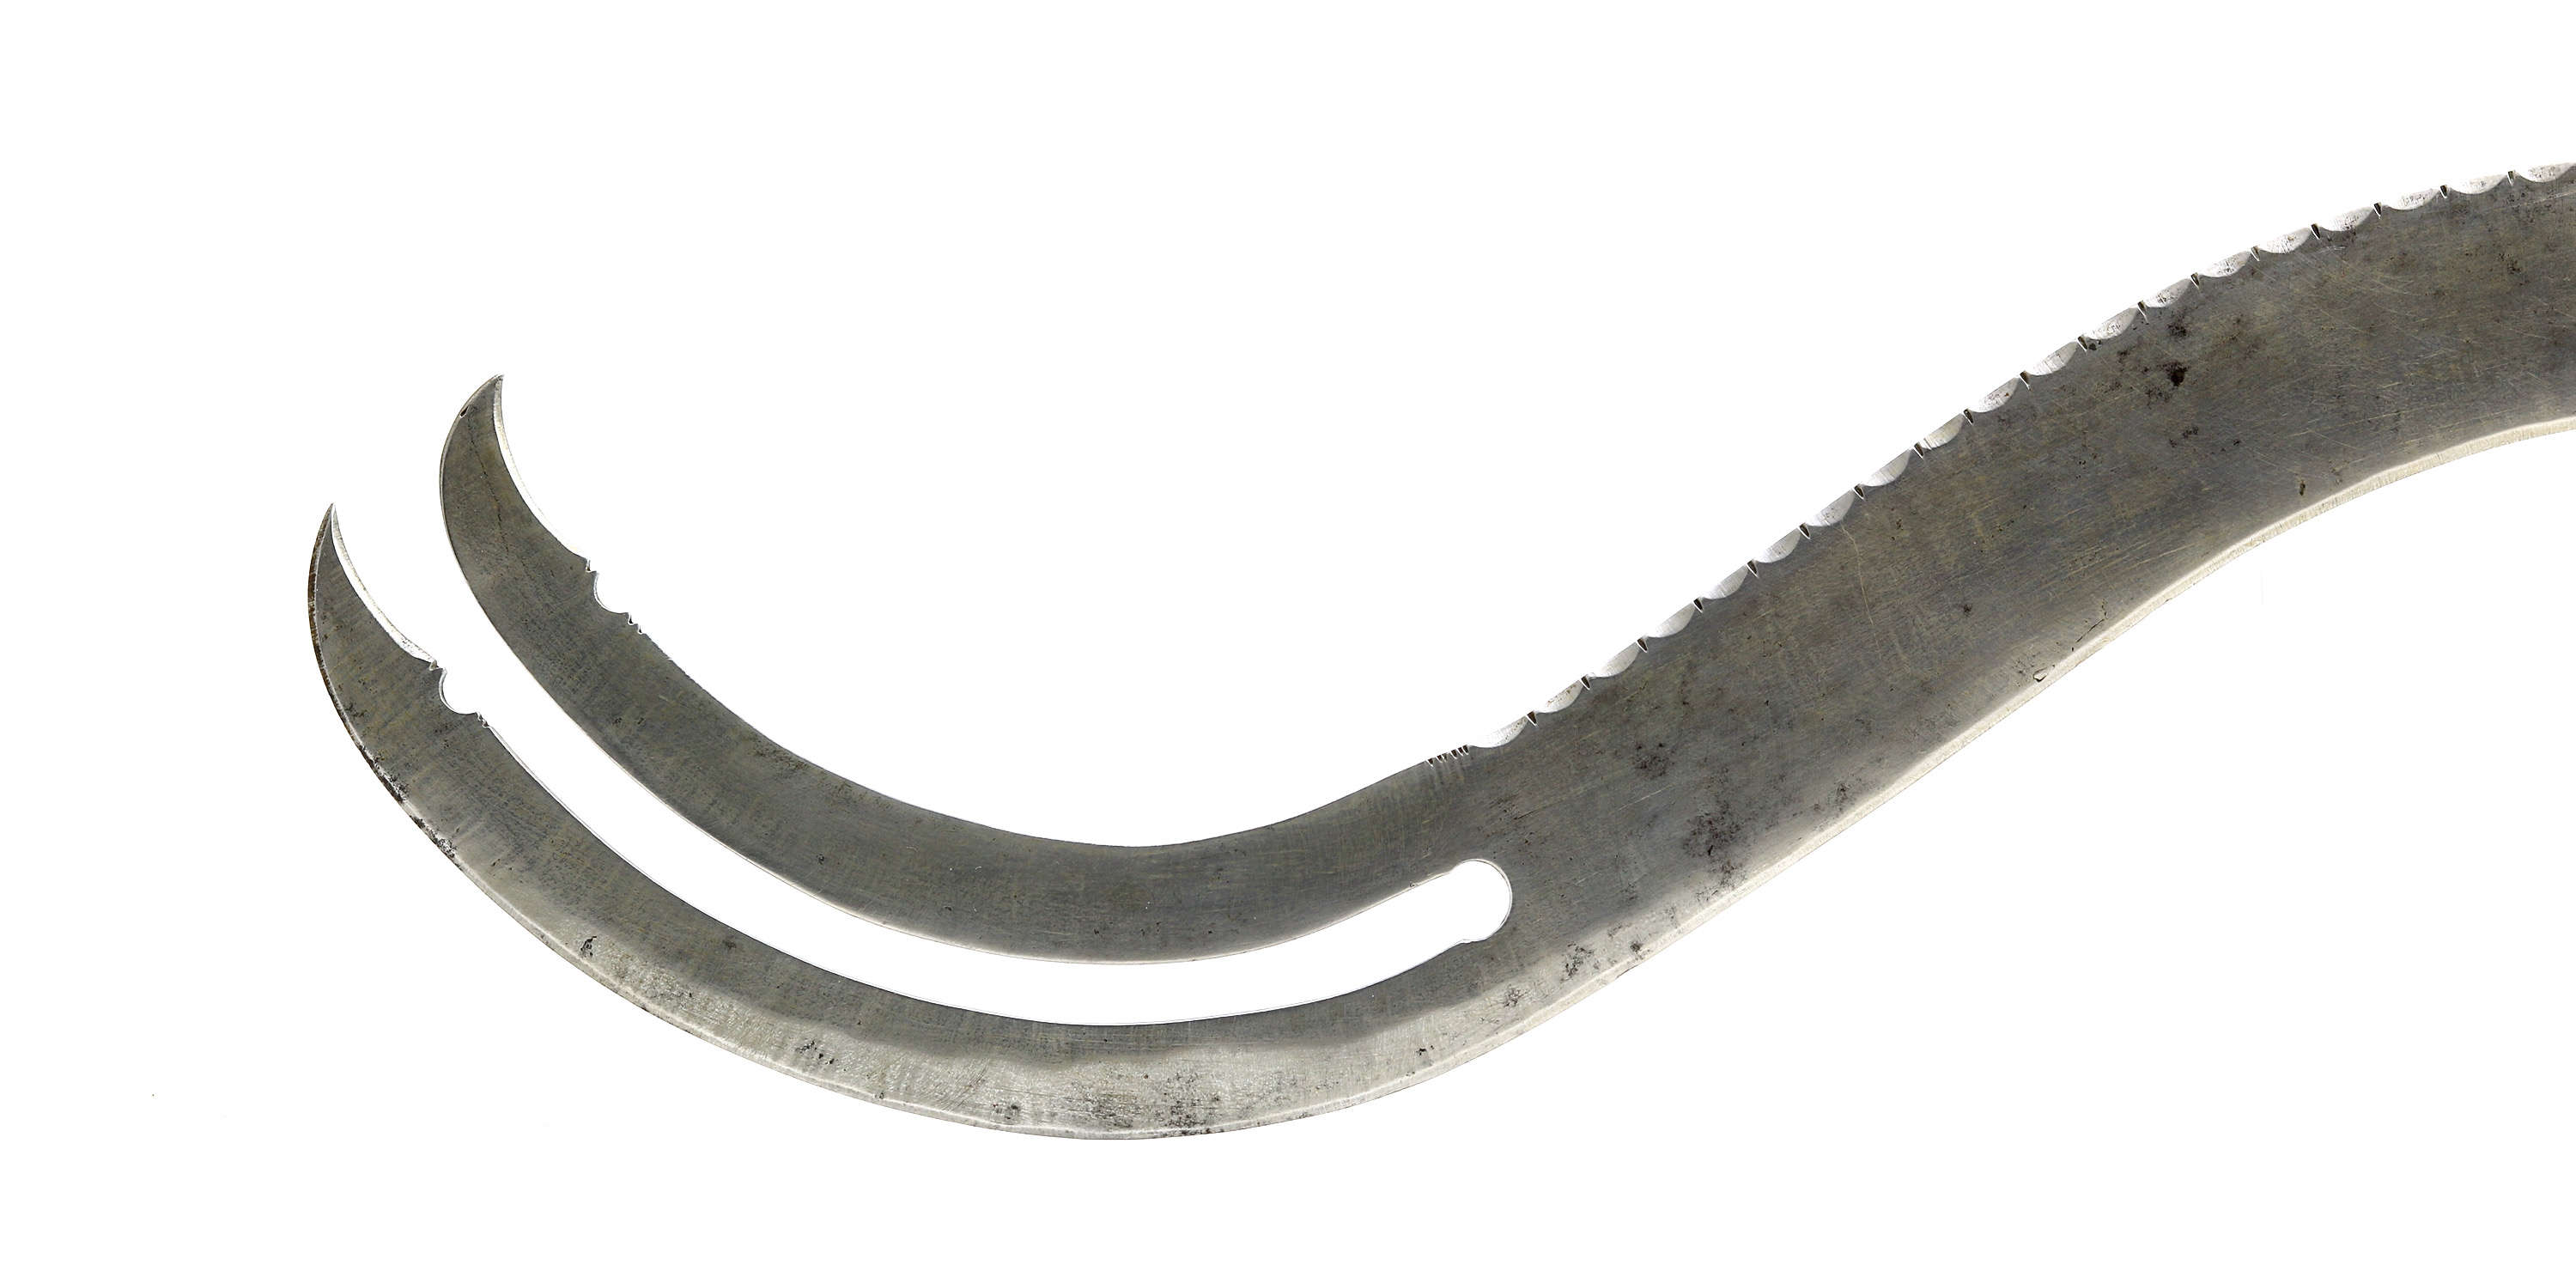 Unusual S shaped Indian zulfiqar sword